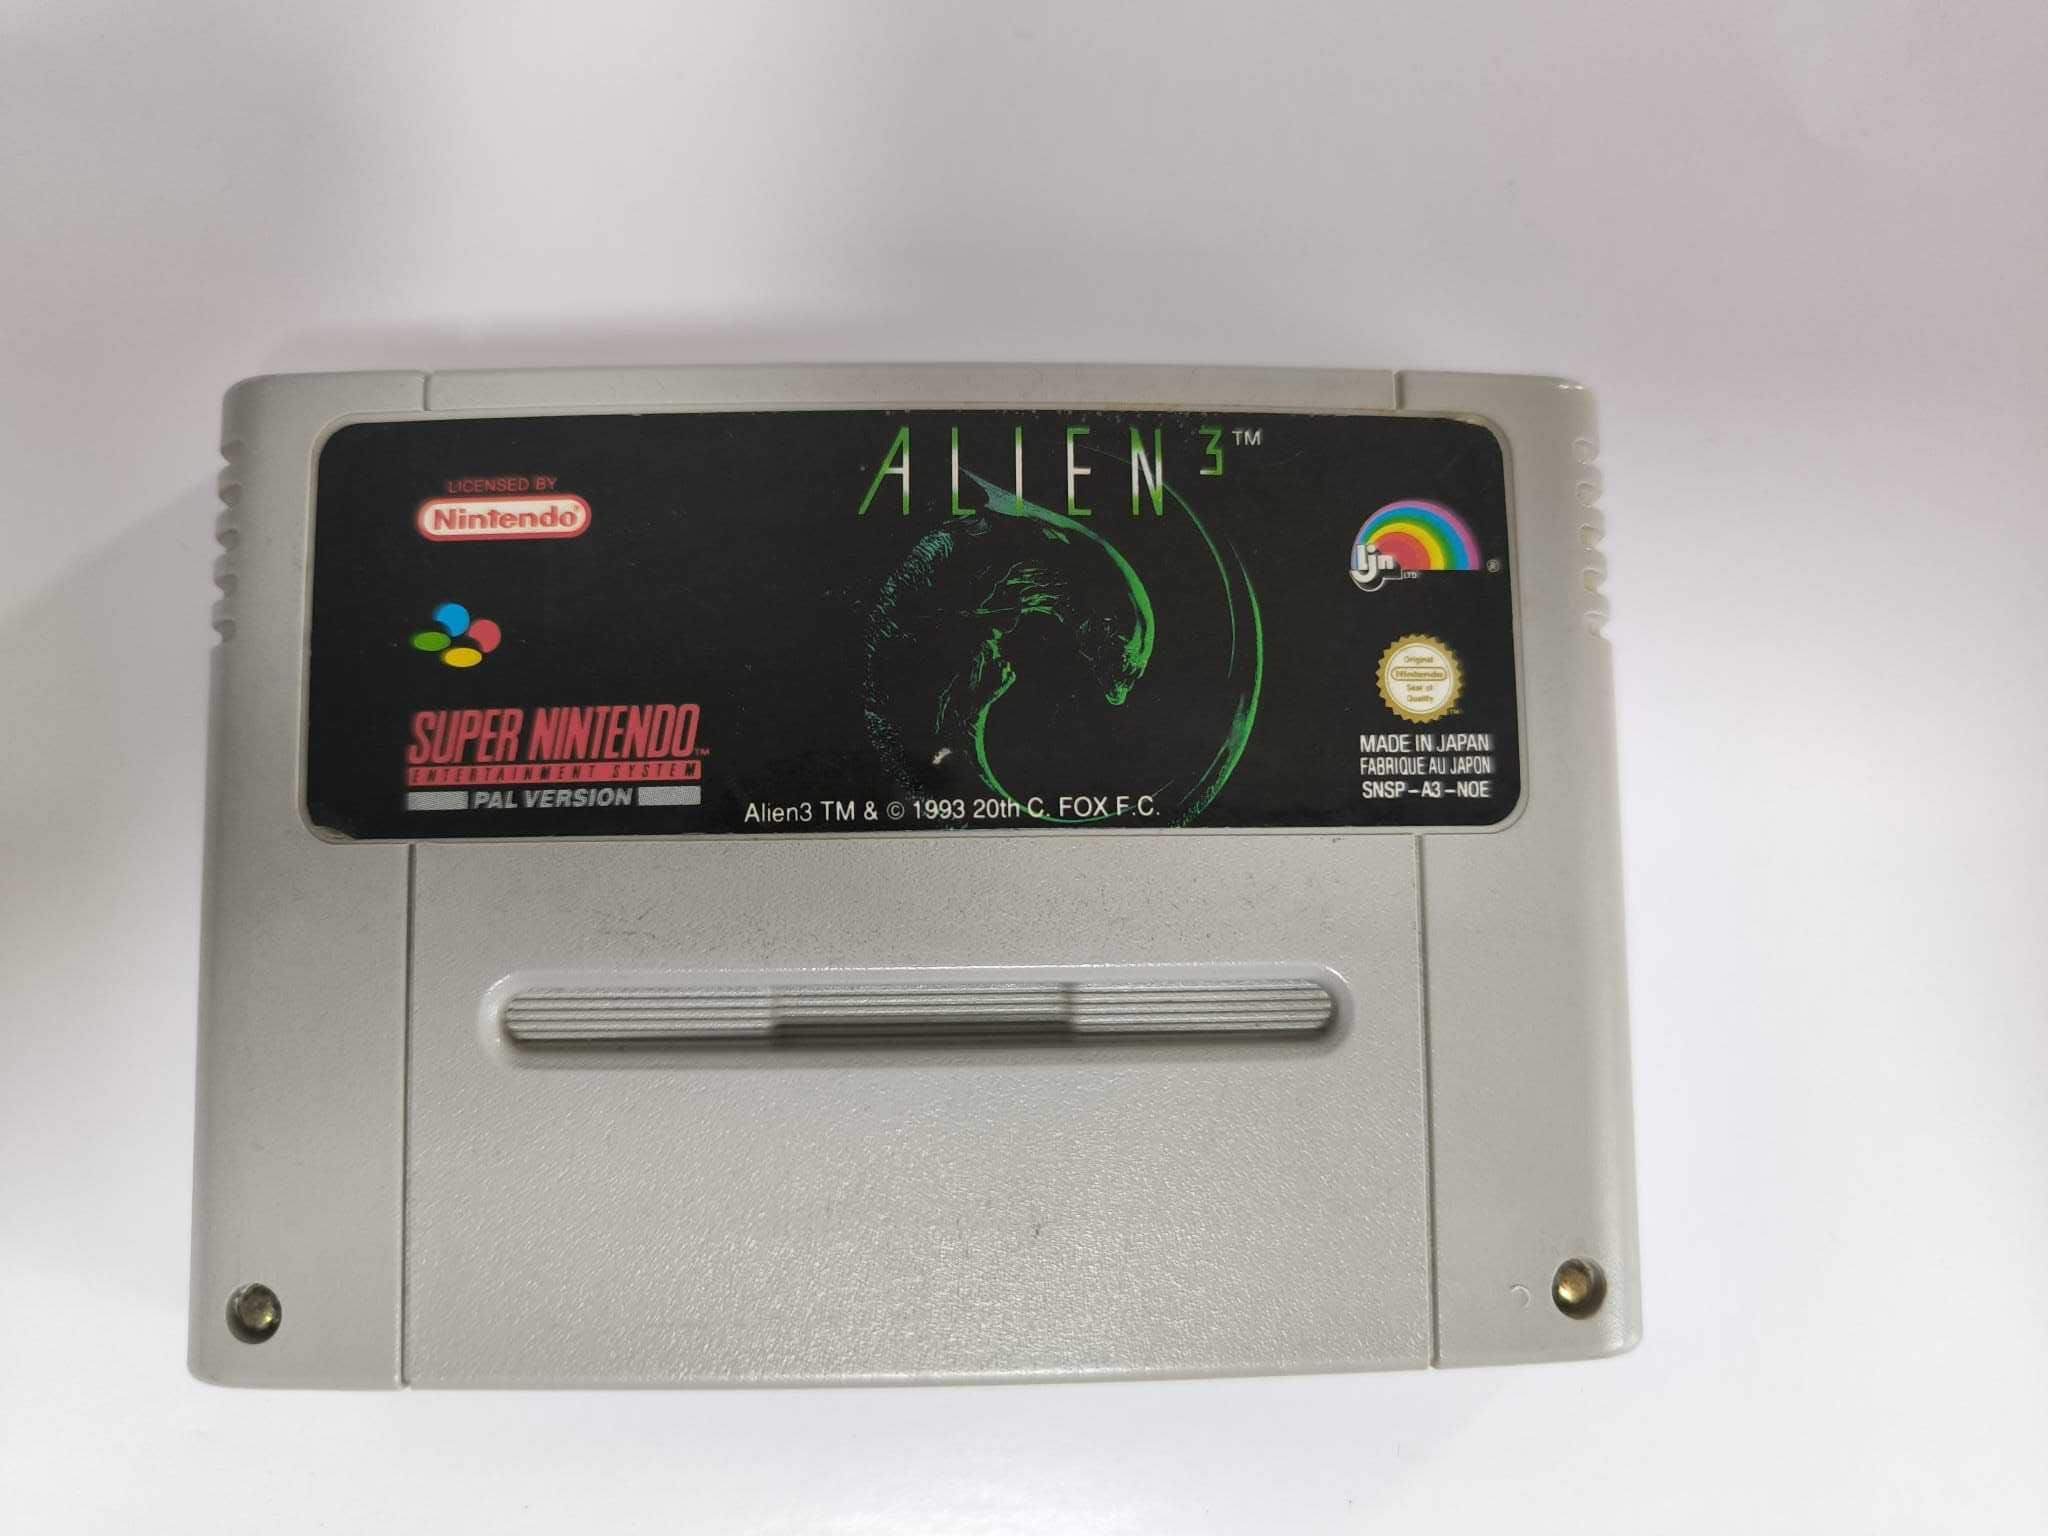 Alien 3 SNES PAL - Original